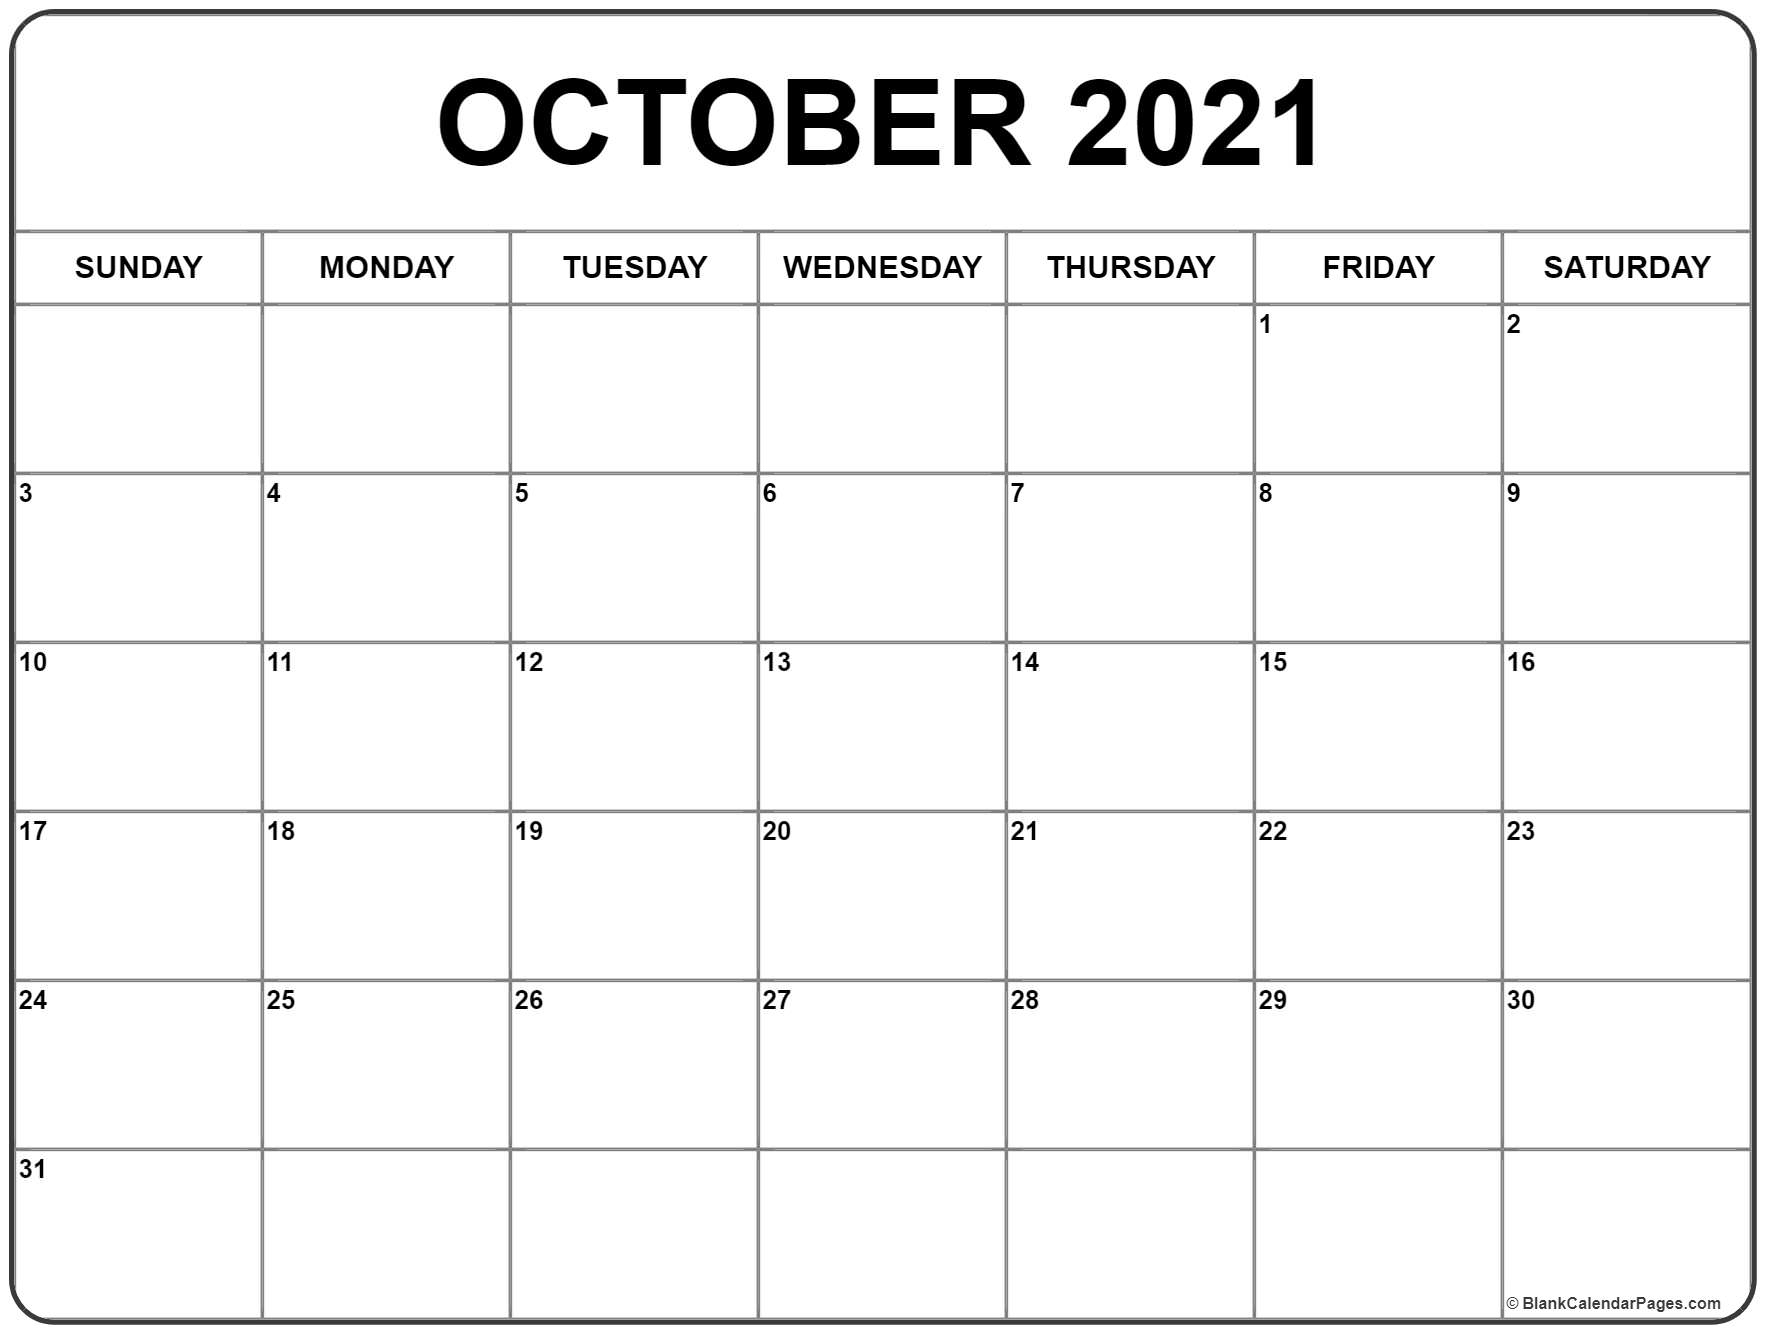 Get August September October 2021 Calendar Printable